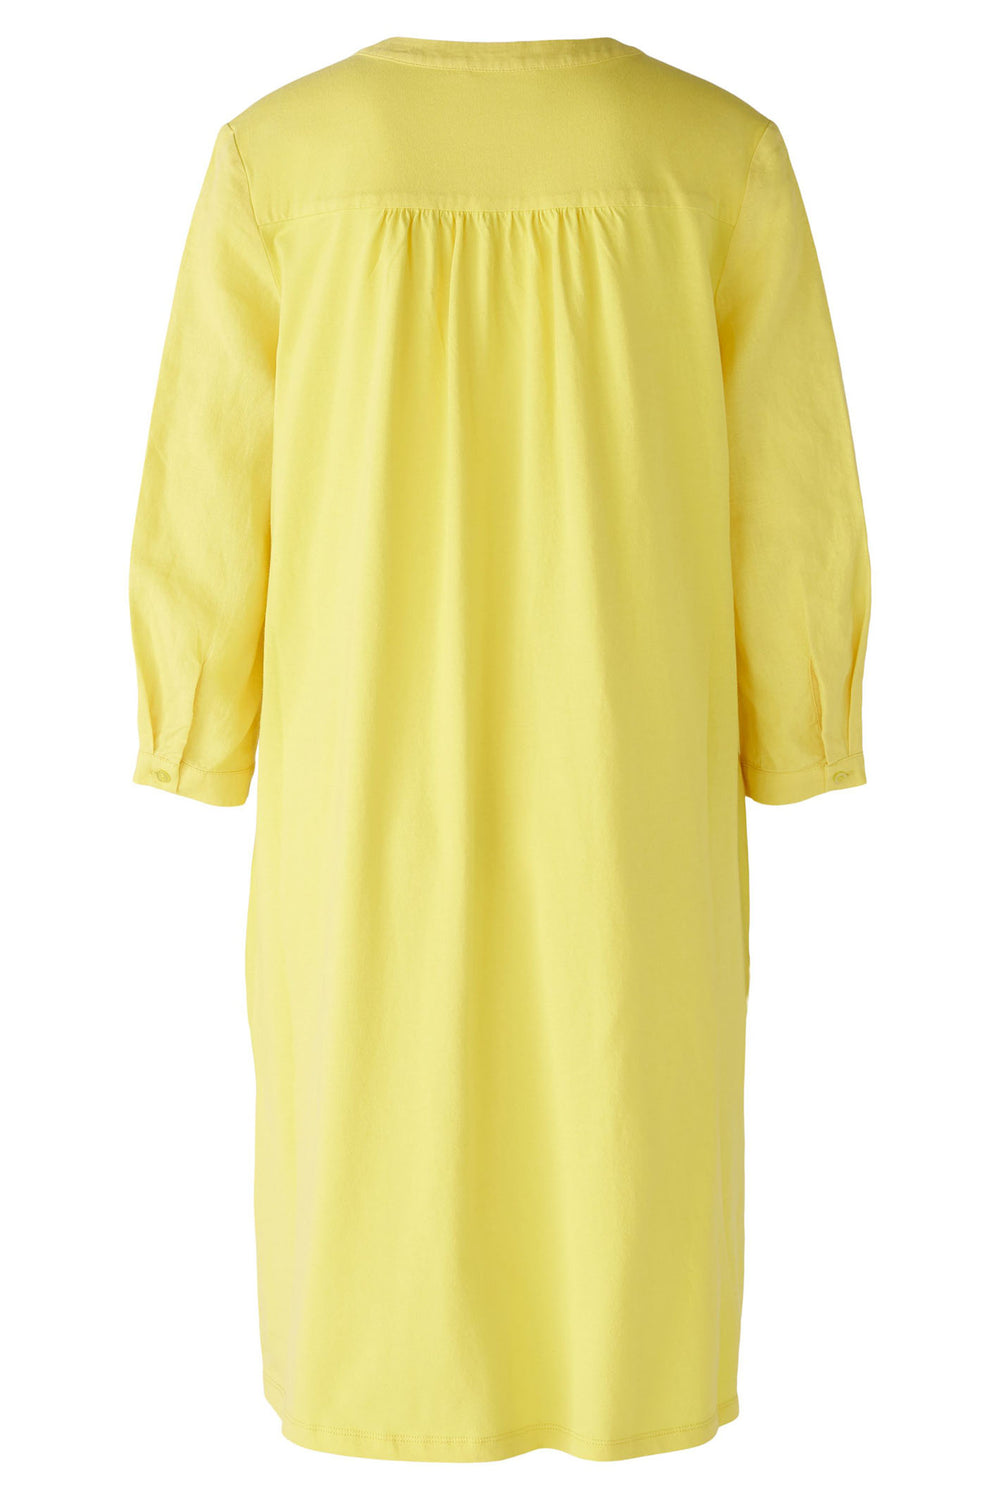 Oui 87560 Yellow Split Neck Linen Dress - Olivia Grace Fashion